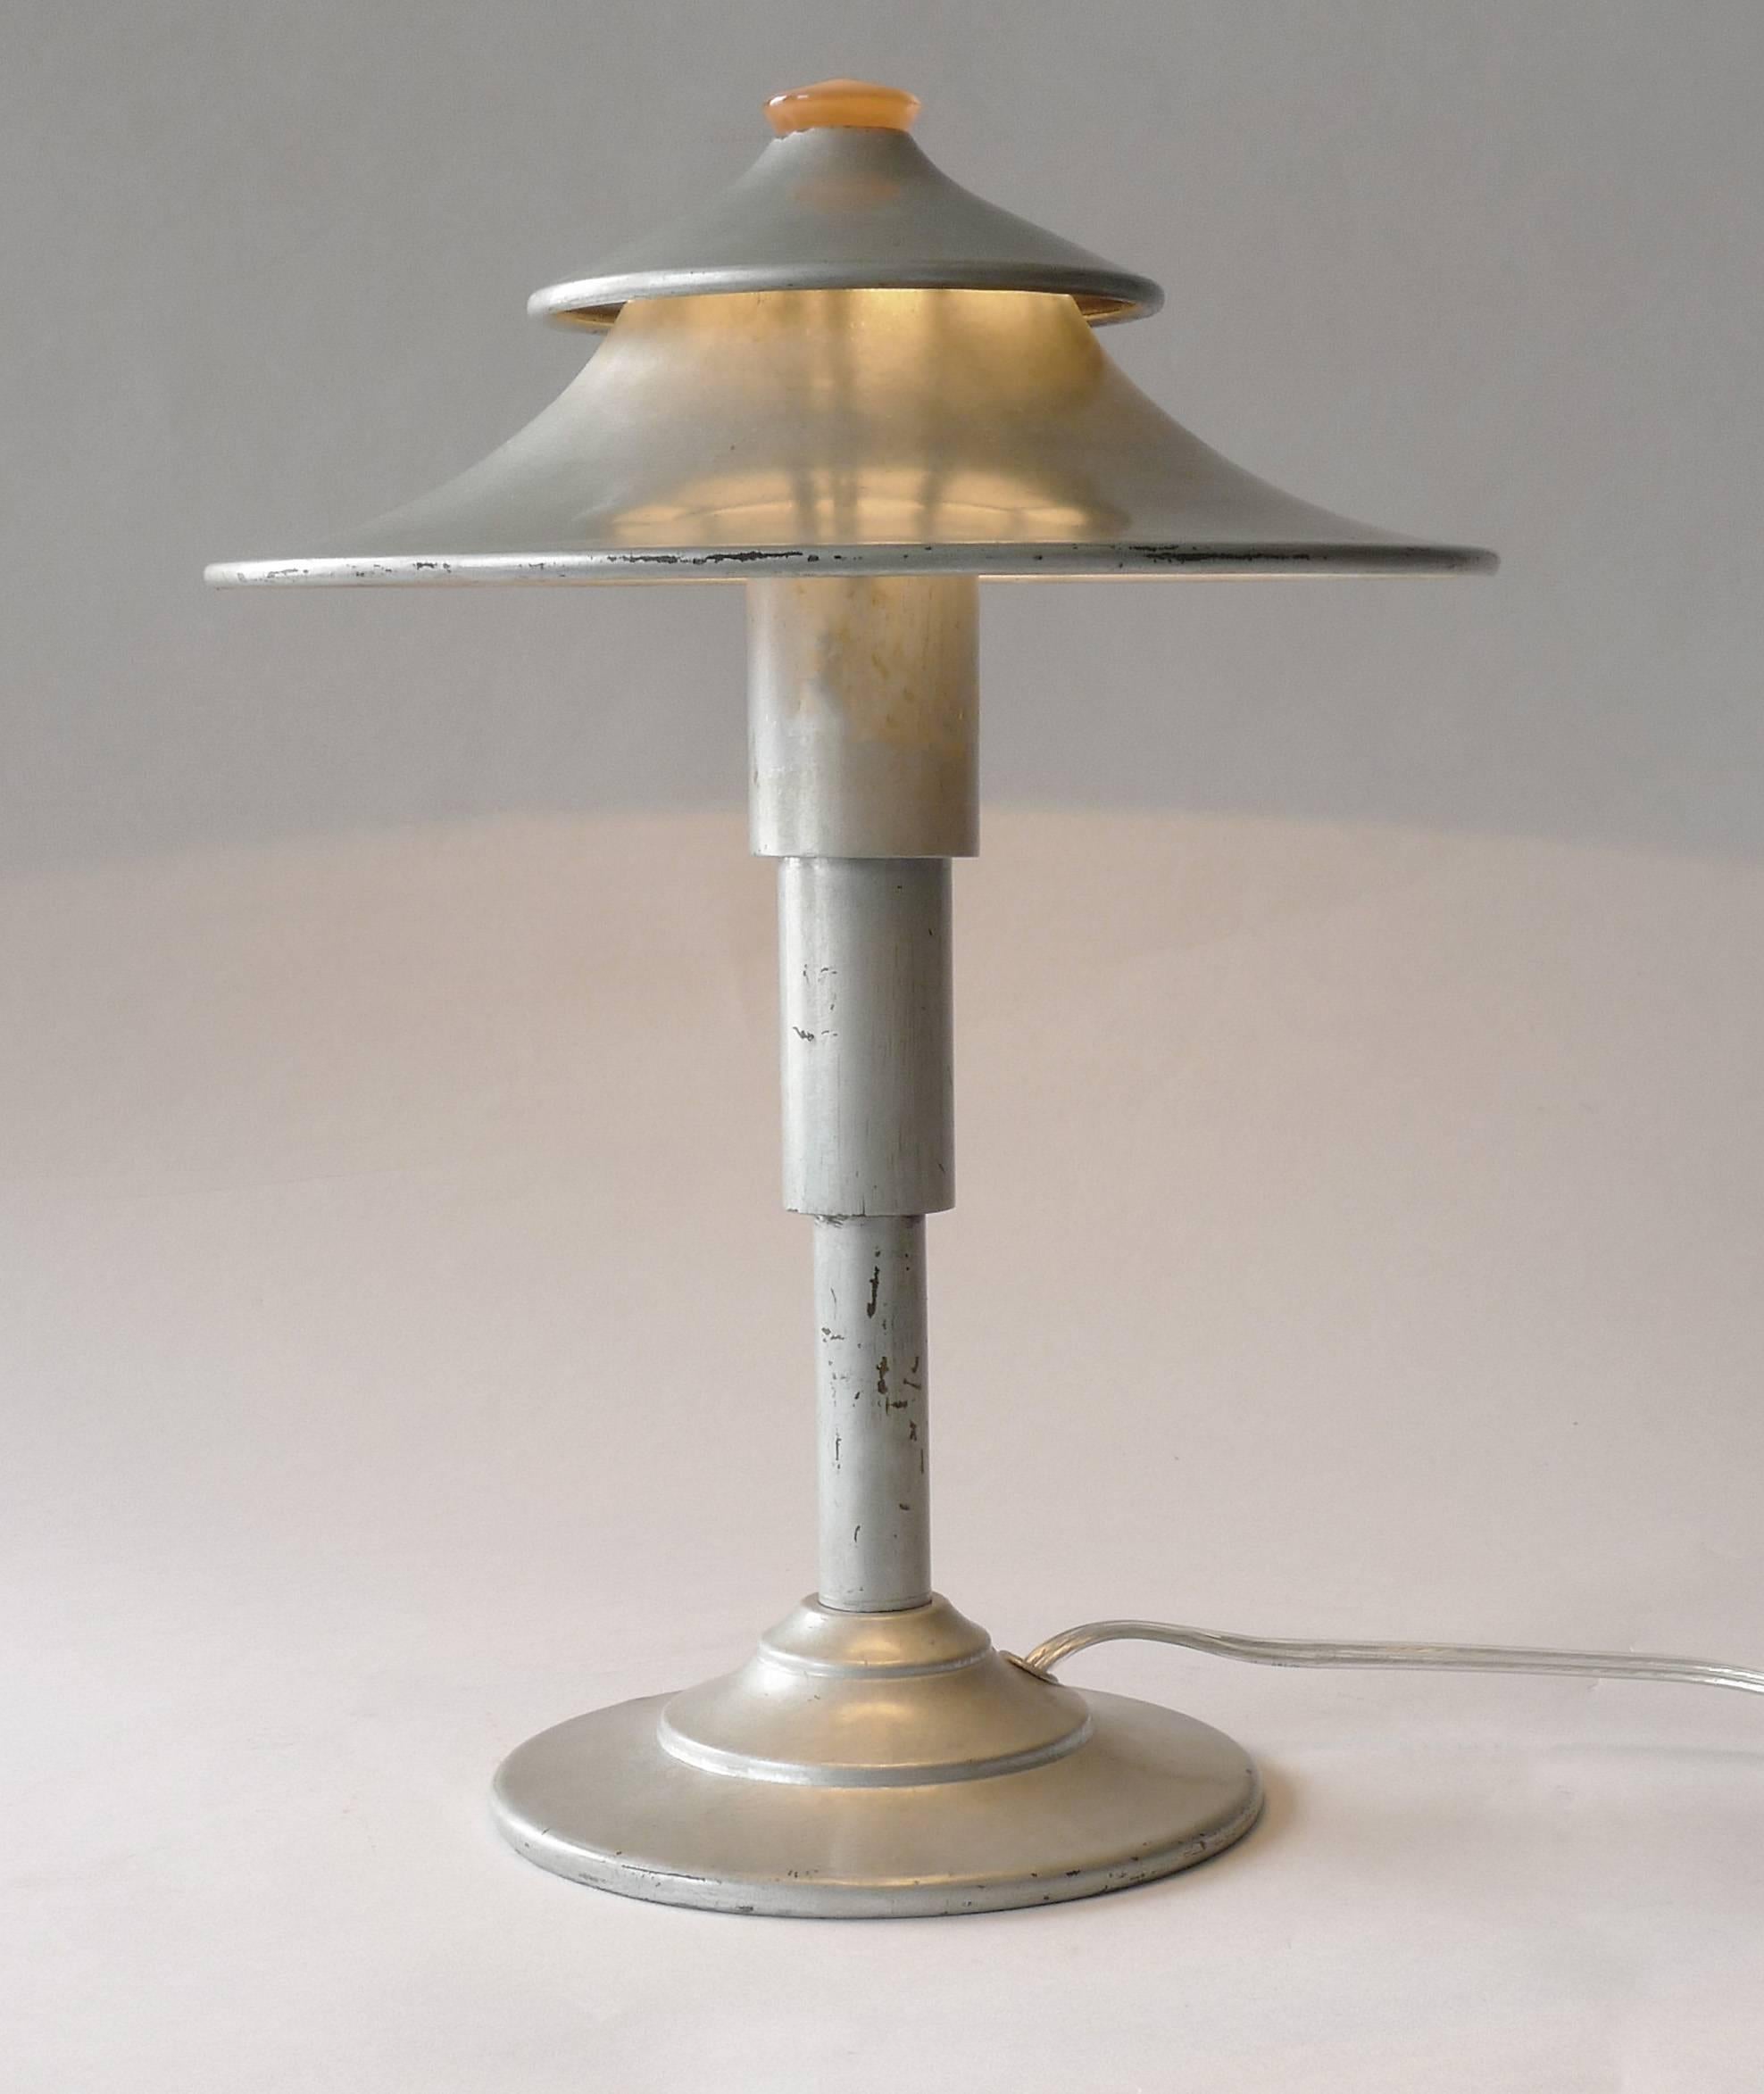 Cast 1930's Art Deco Iconic Walter Von Nessen Table Lamp For Sale